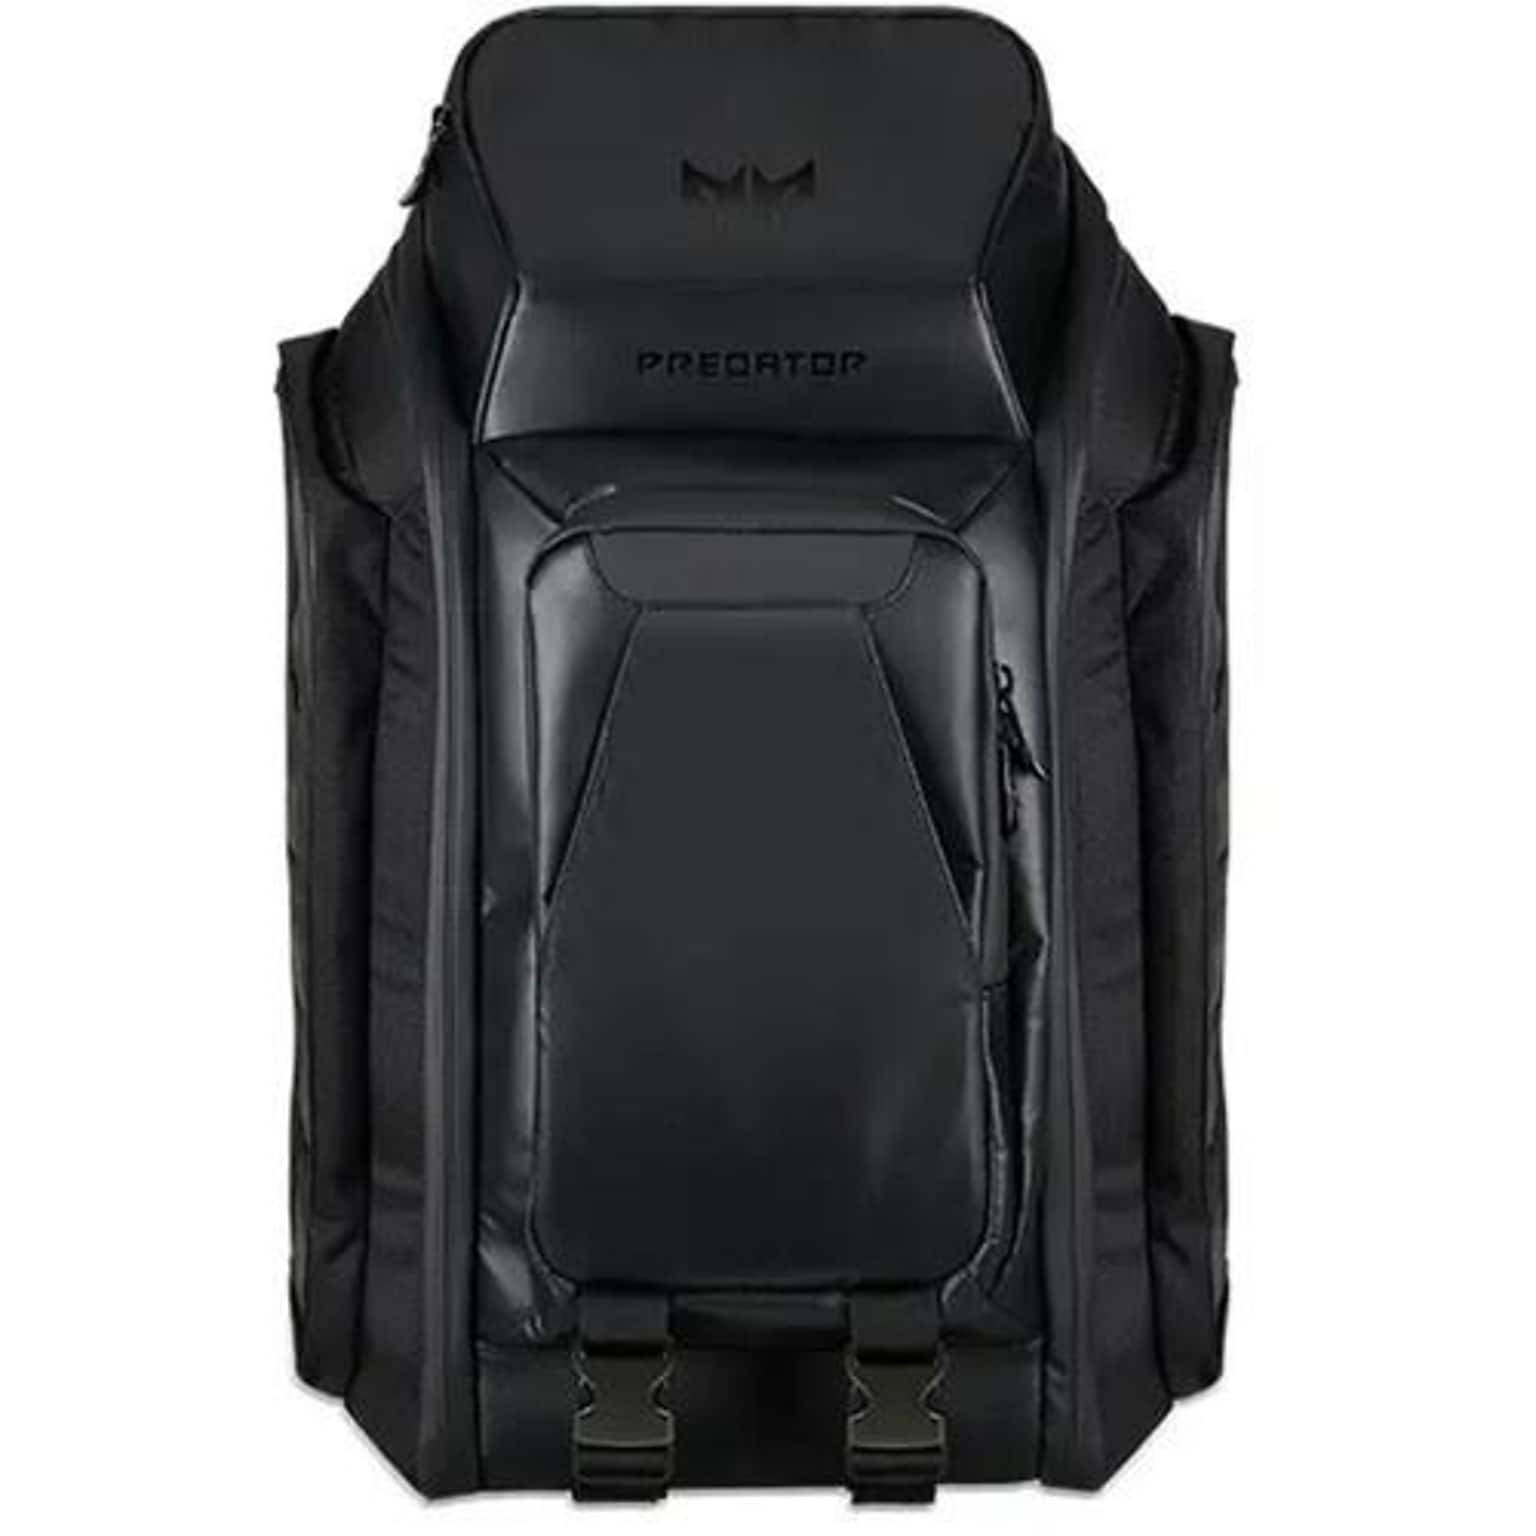 Acer Predator PBG920 Gaming M-Utility Backpack , Black (NP.BAG11.014)